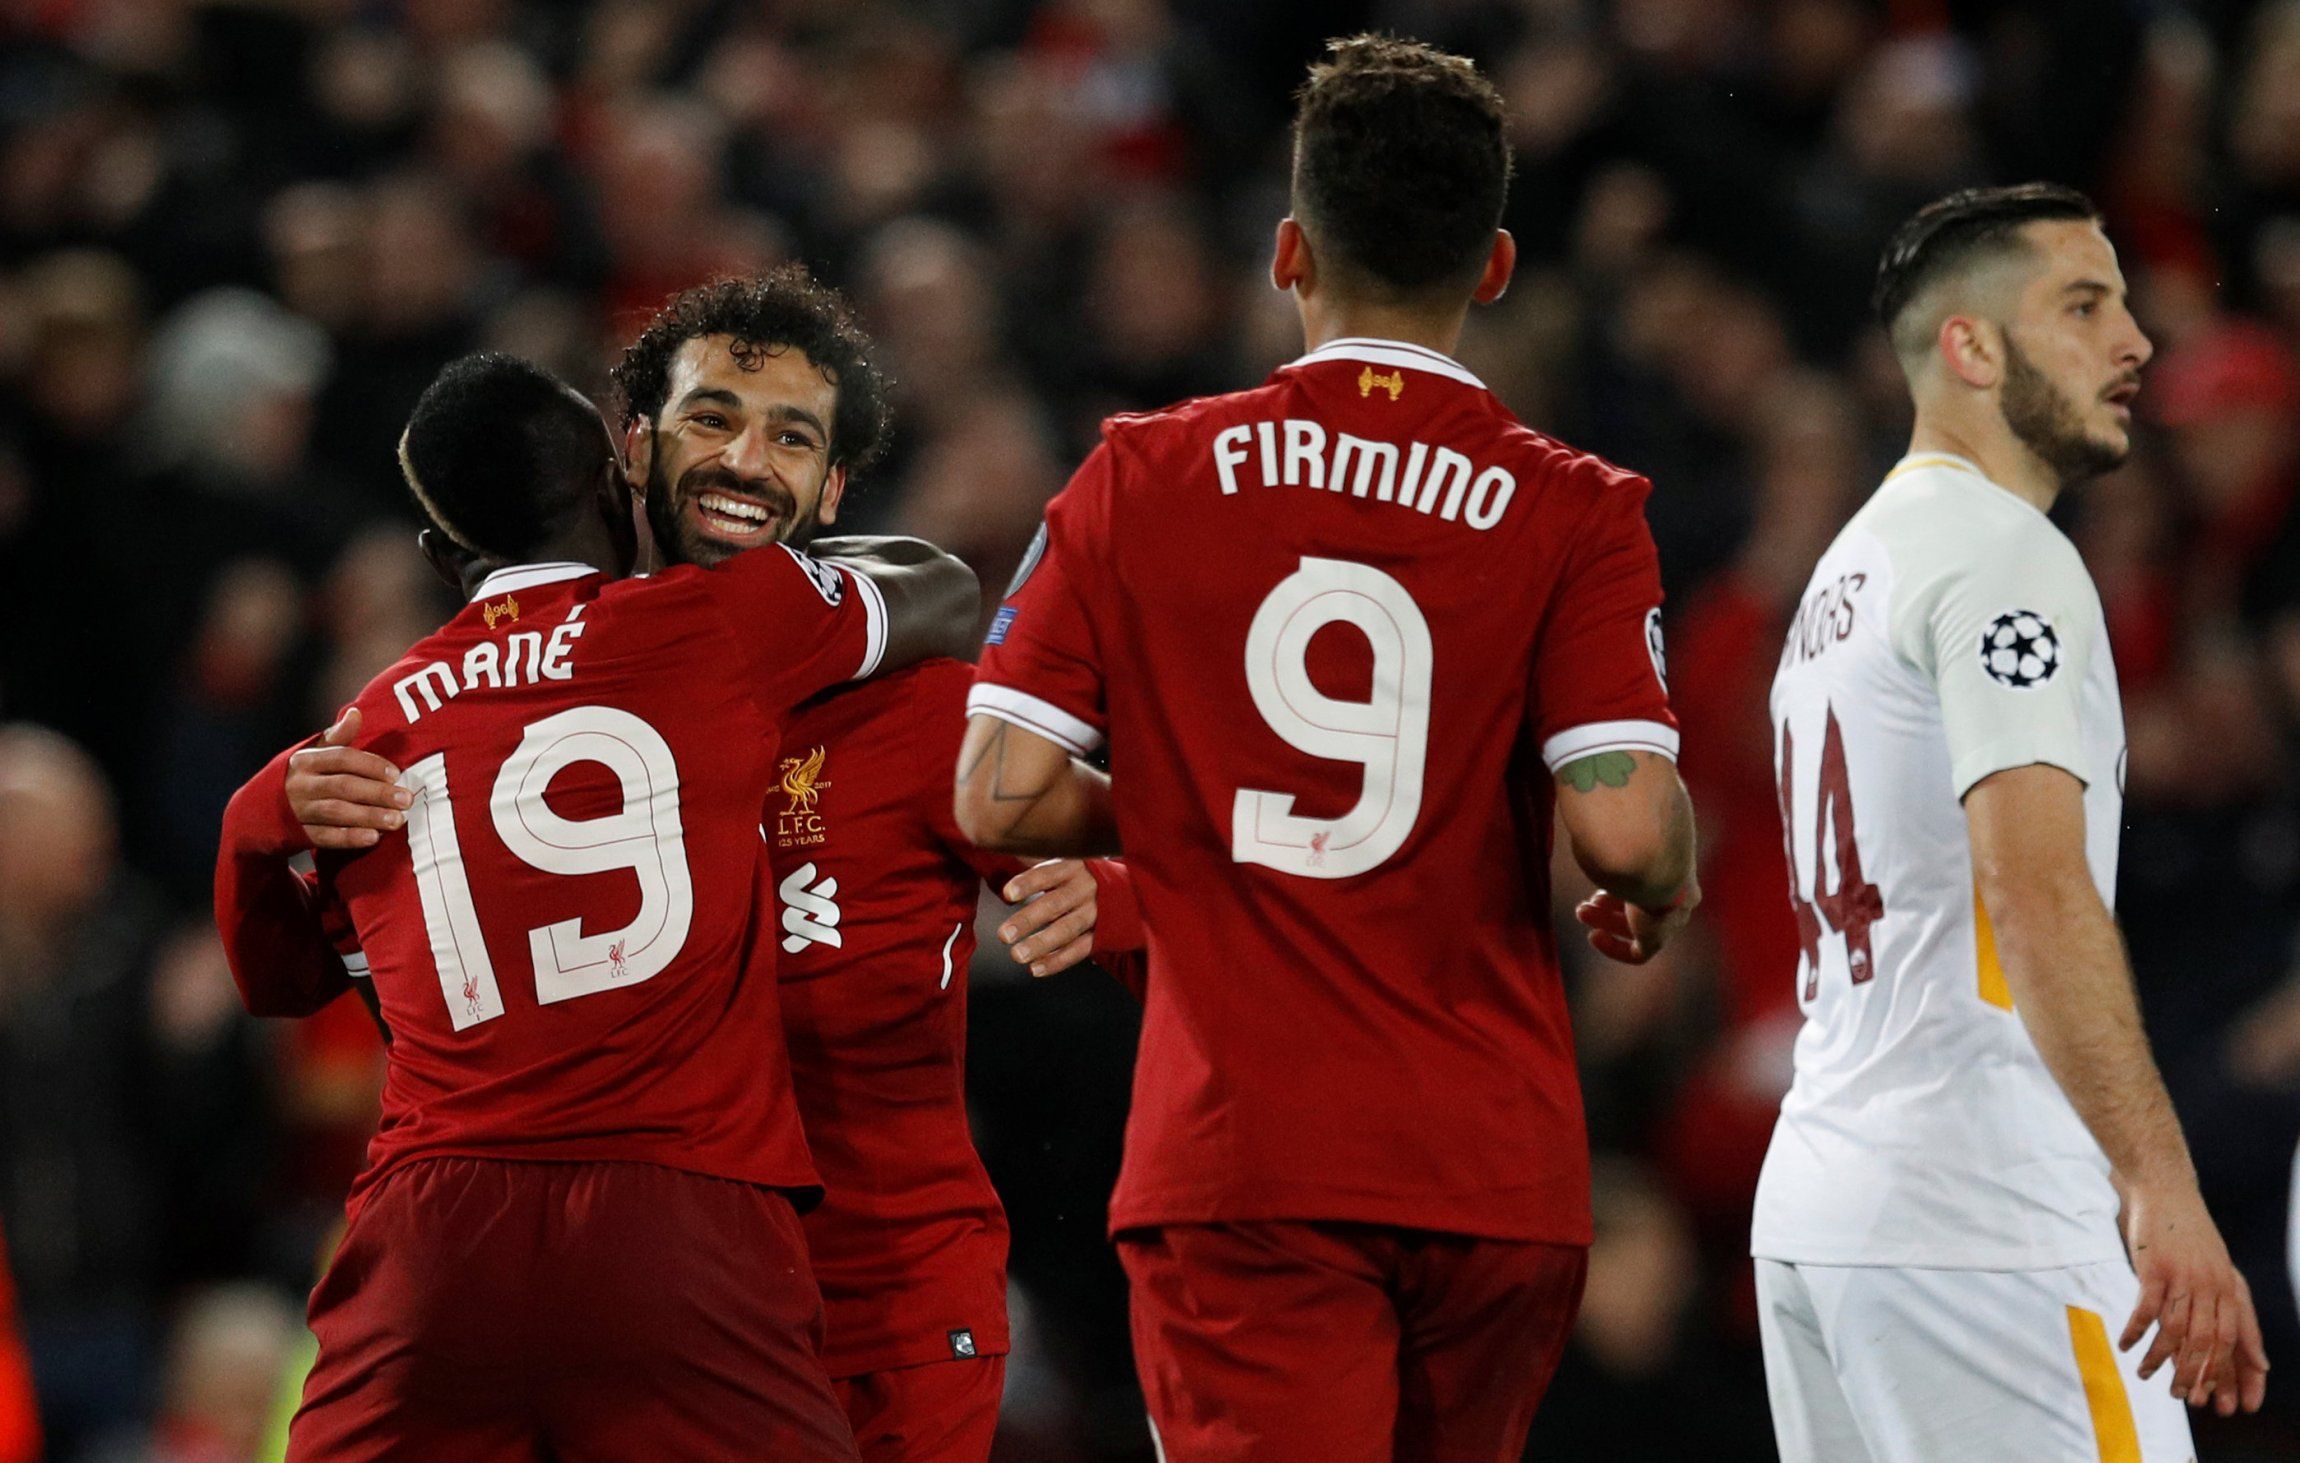 Sadio Mane, Mohamed Salah and Roberto Firmino